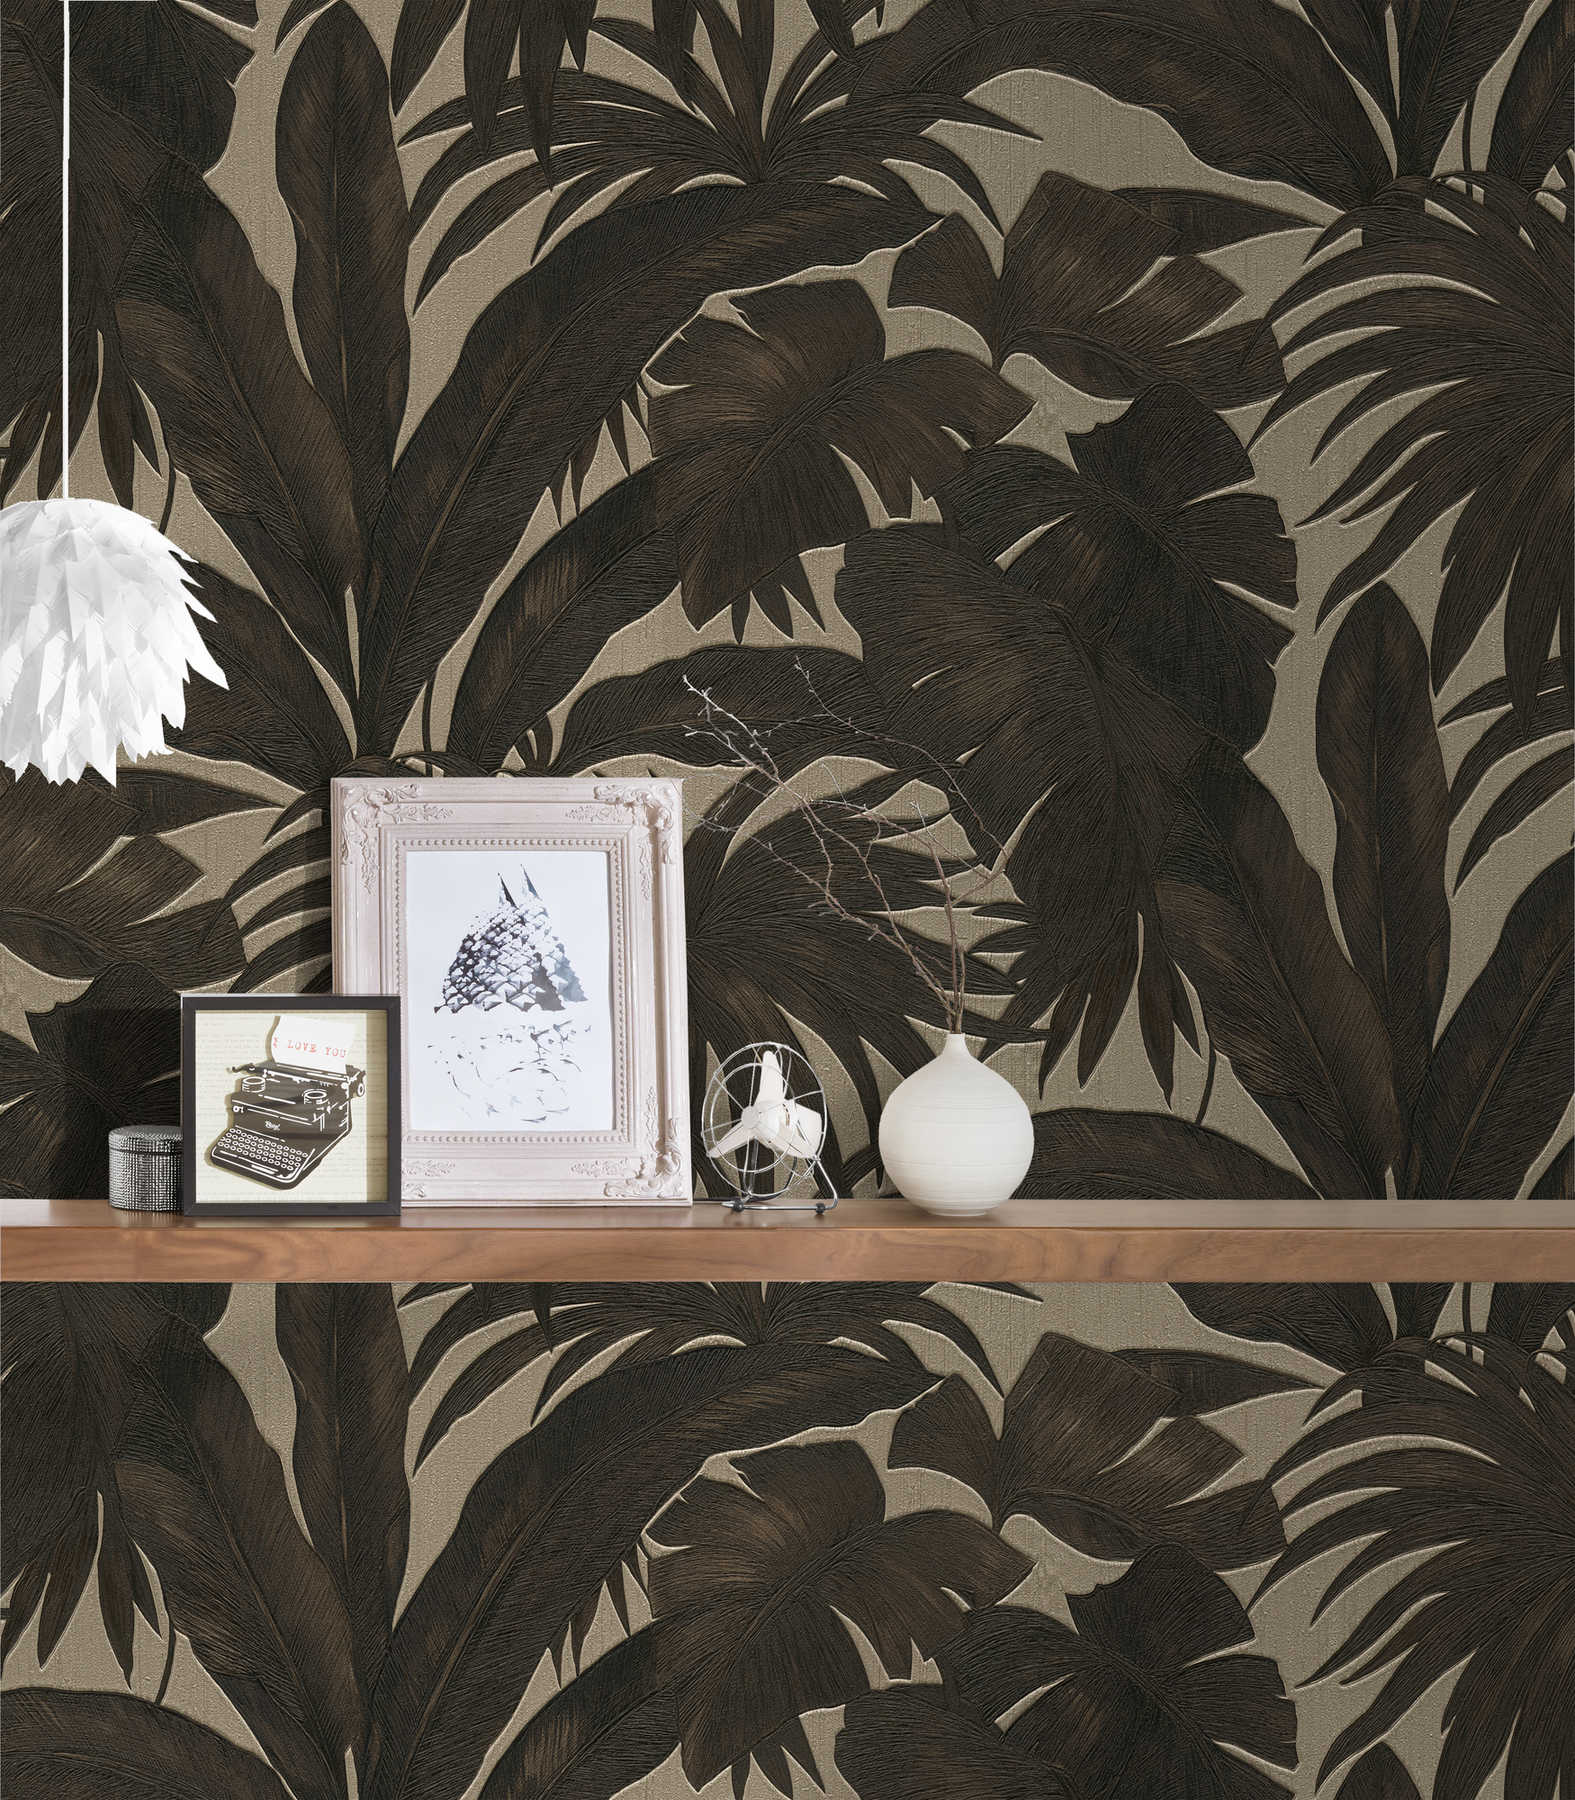             VERSACE wallpaper palm trees & metallic effect - Brown, Metallic
        